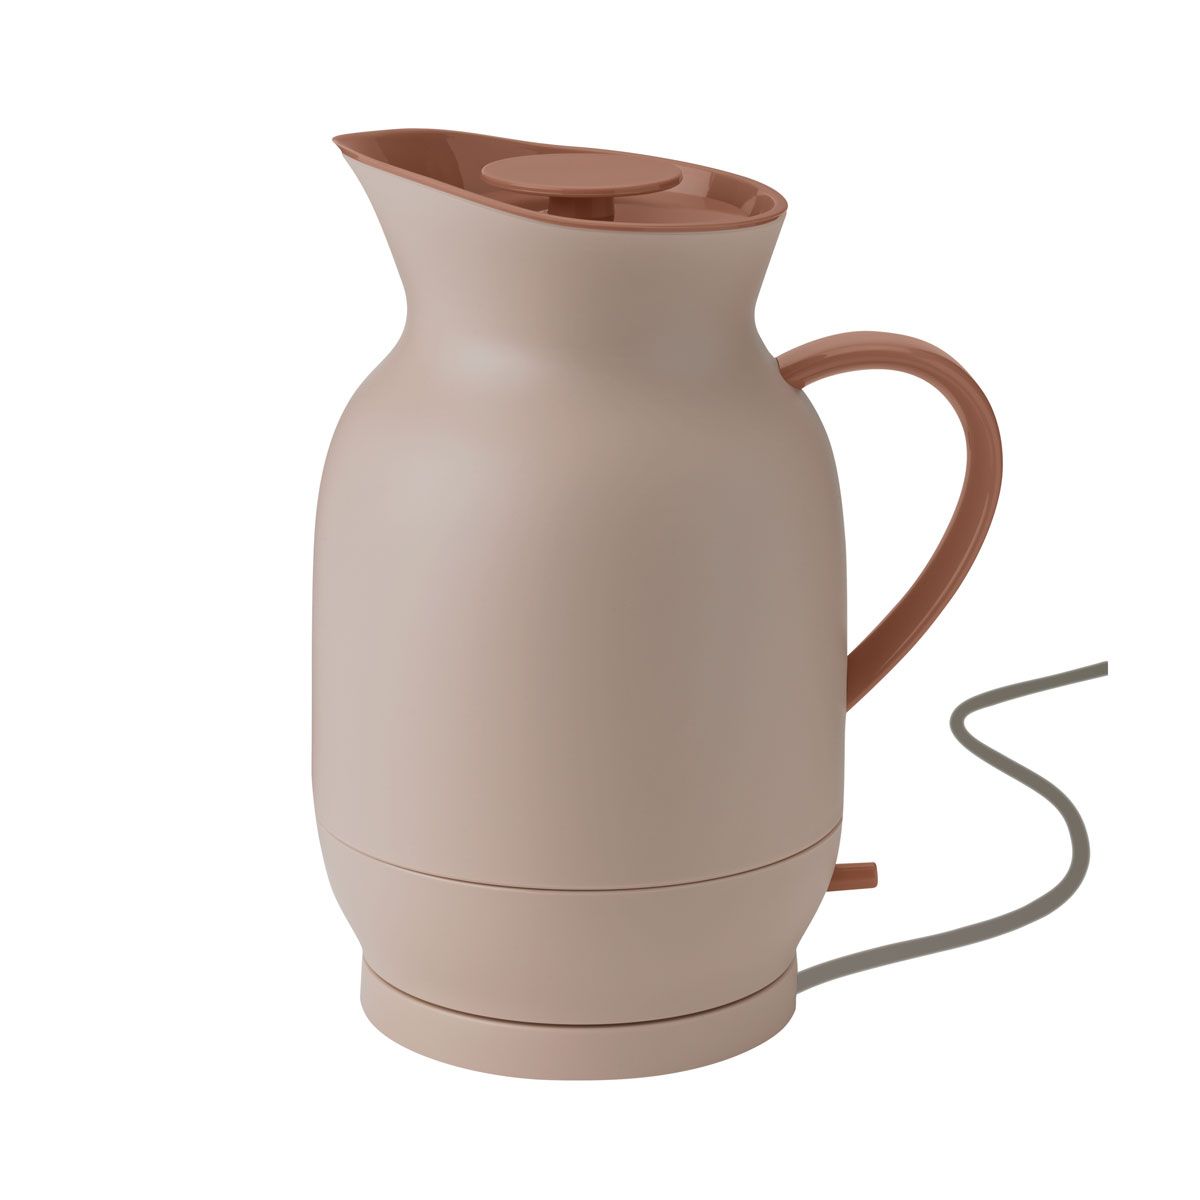 Stelton / Amphora / Wasserkocher